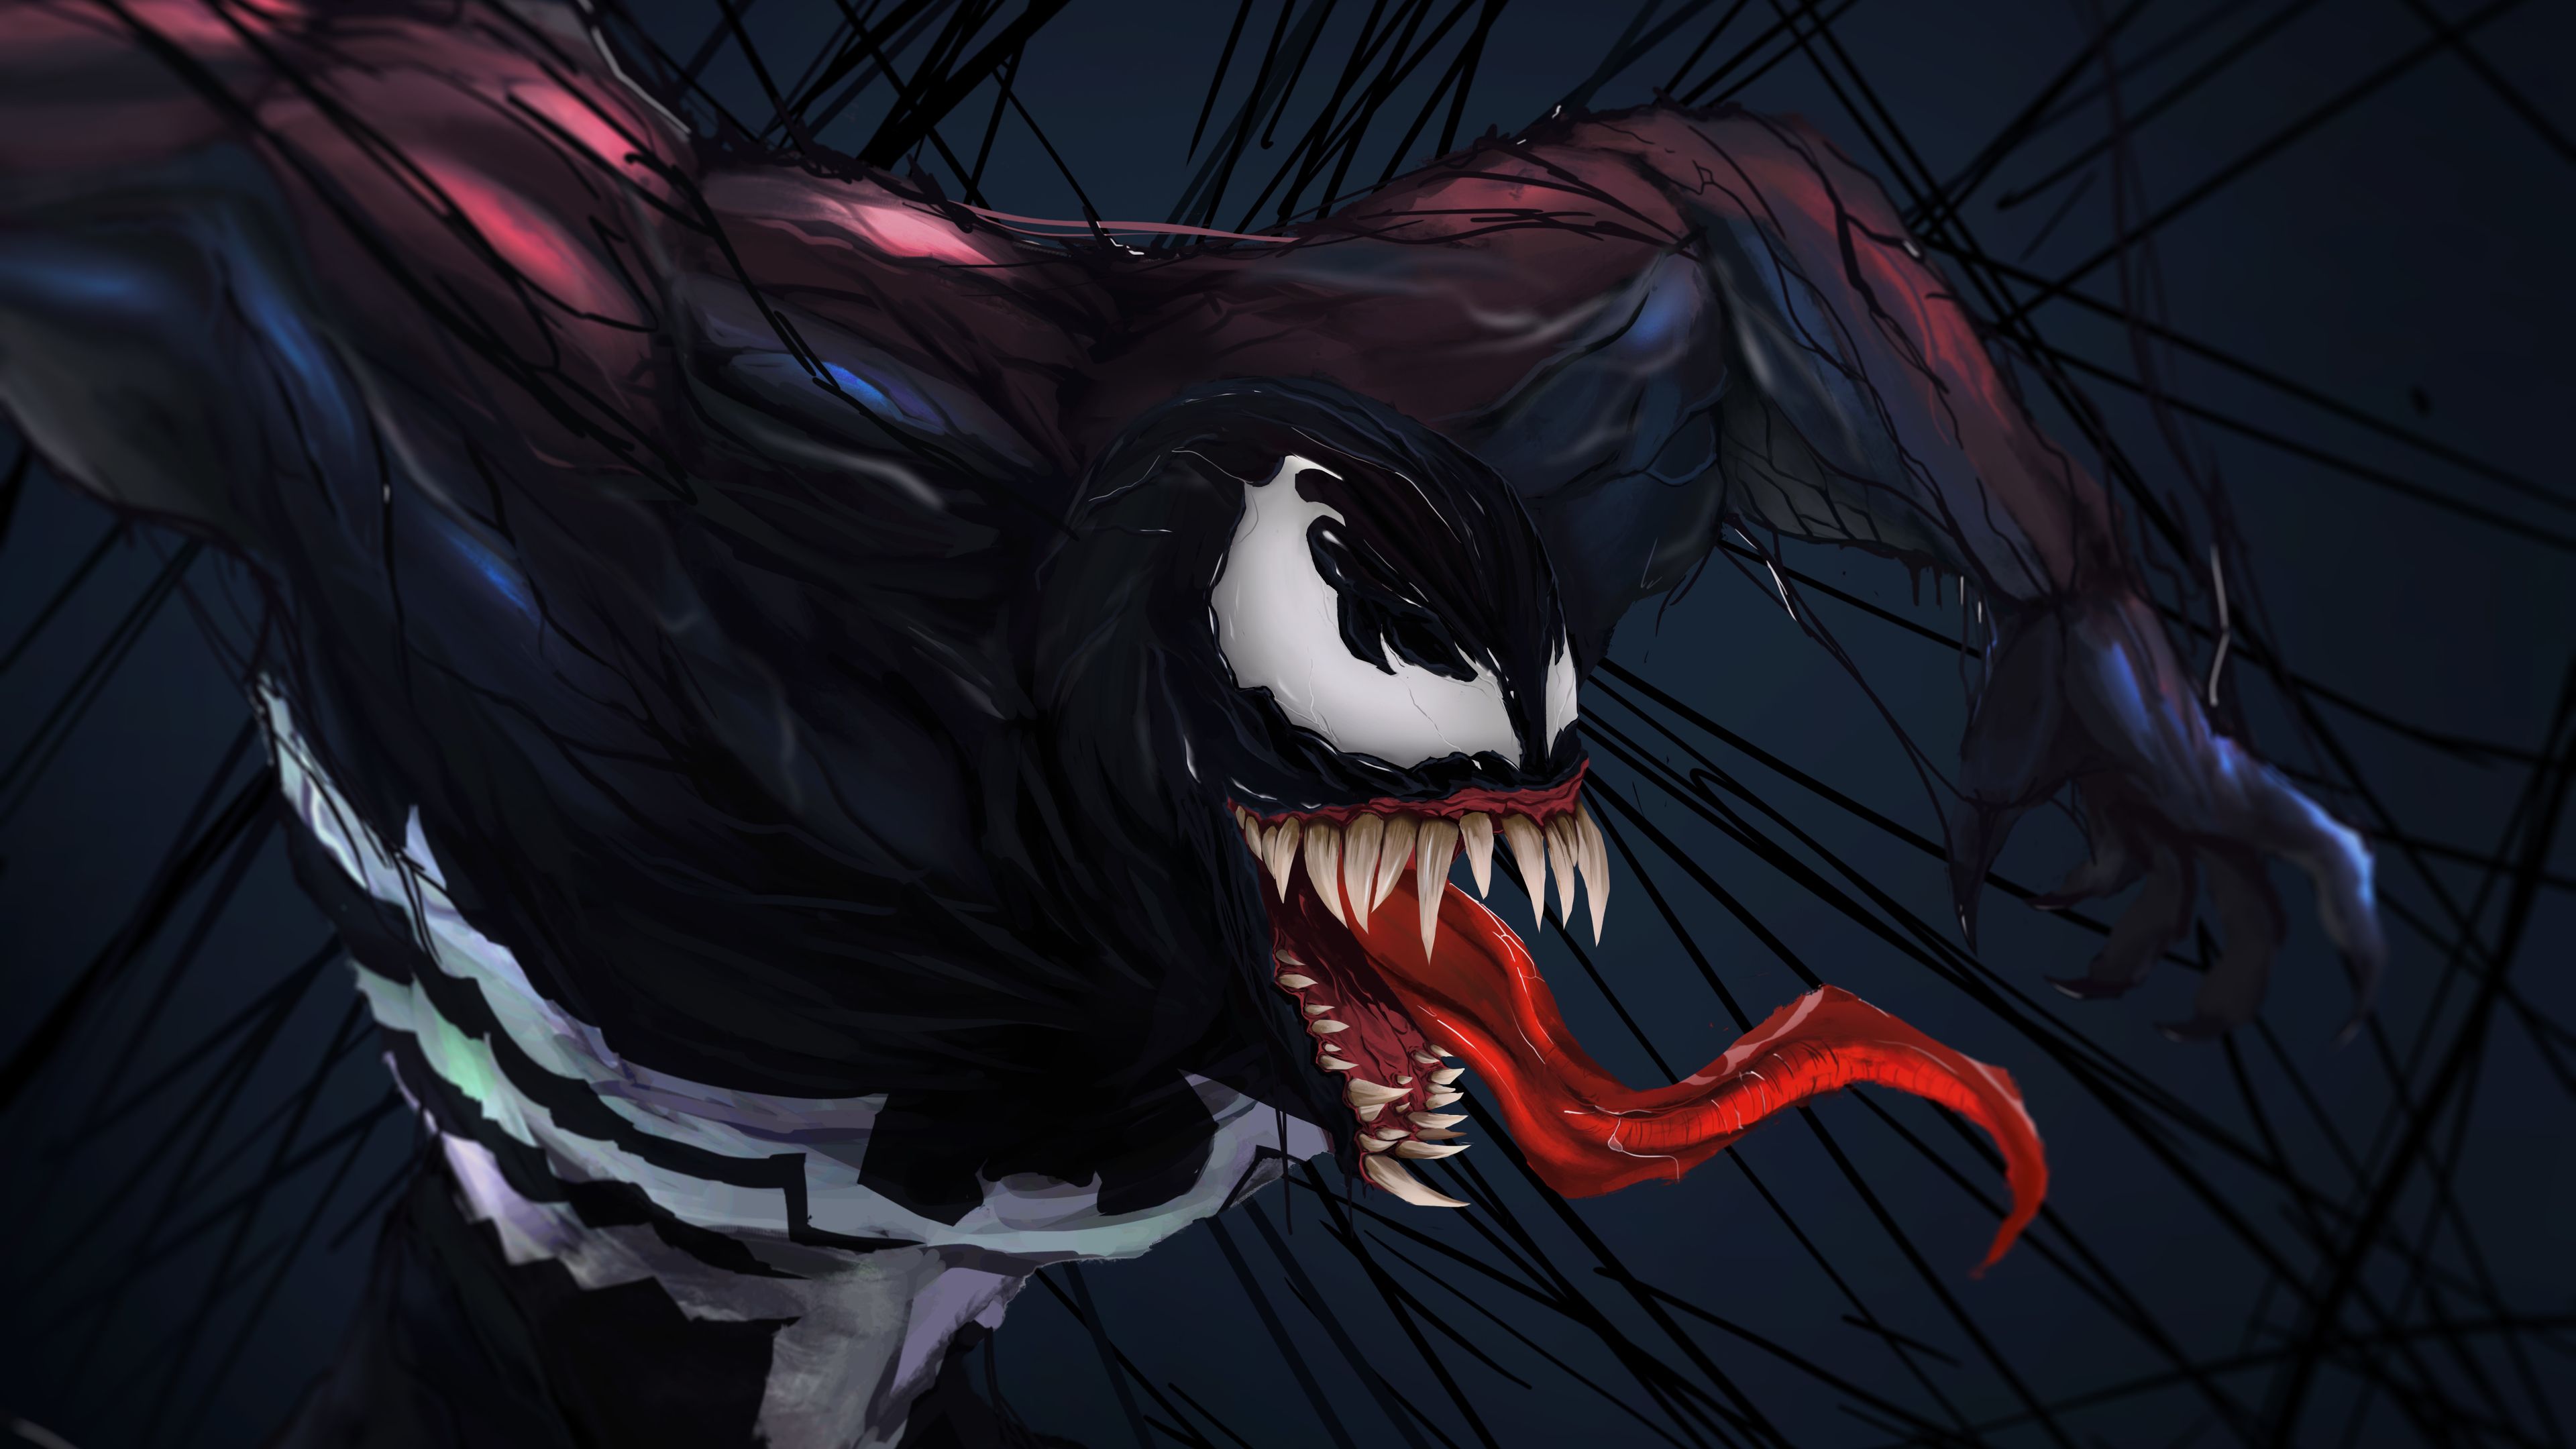 Tom Hardy As Venom 4K Digital Art Wallpapers